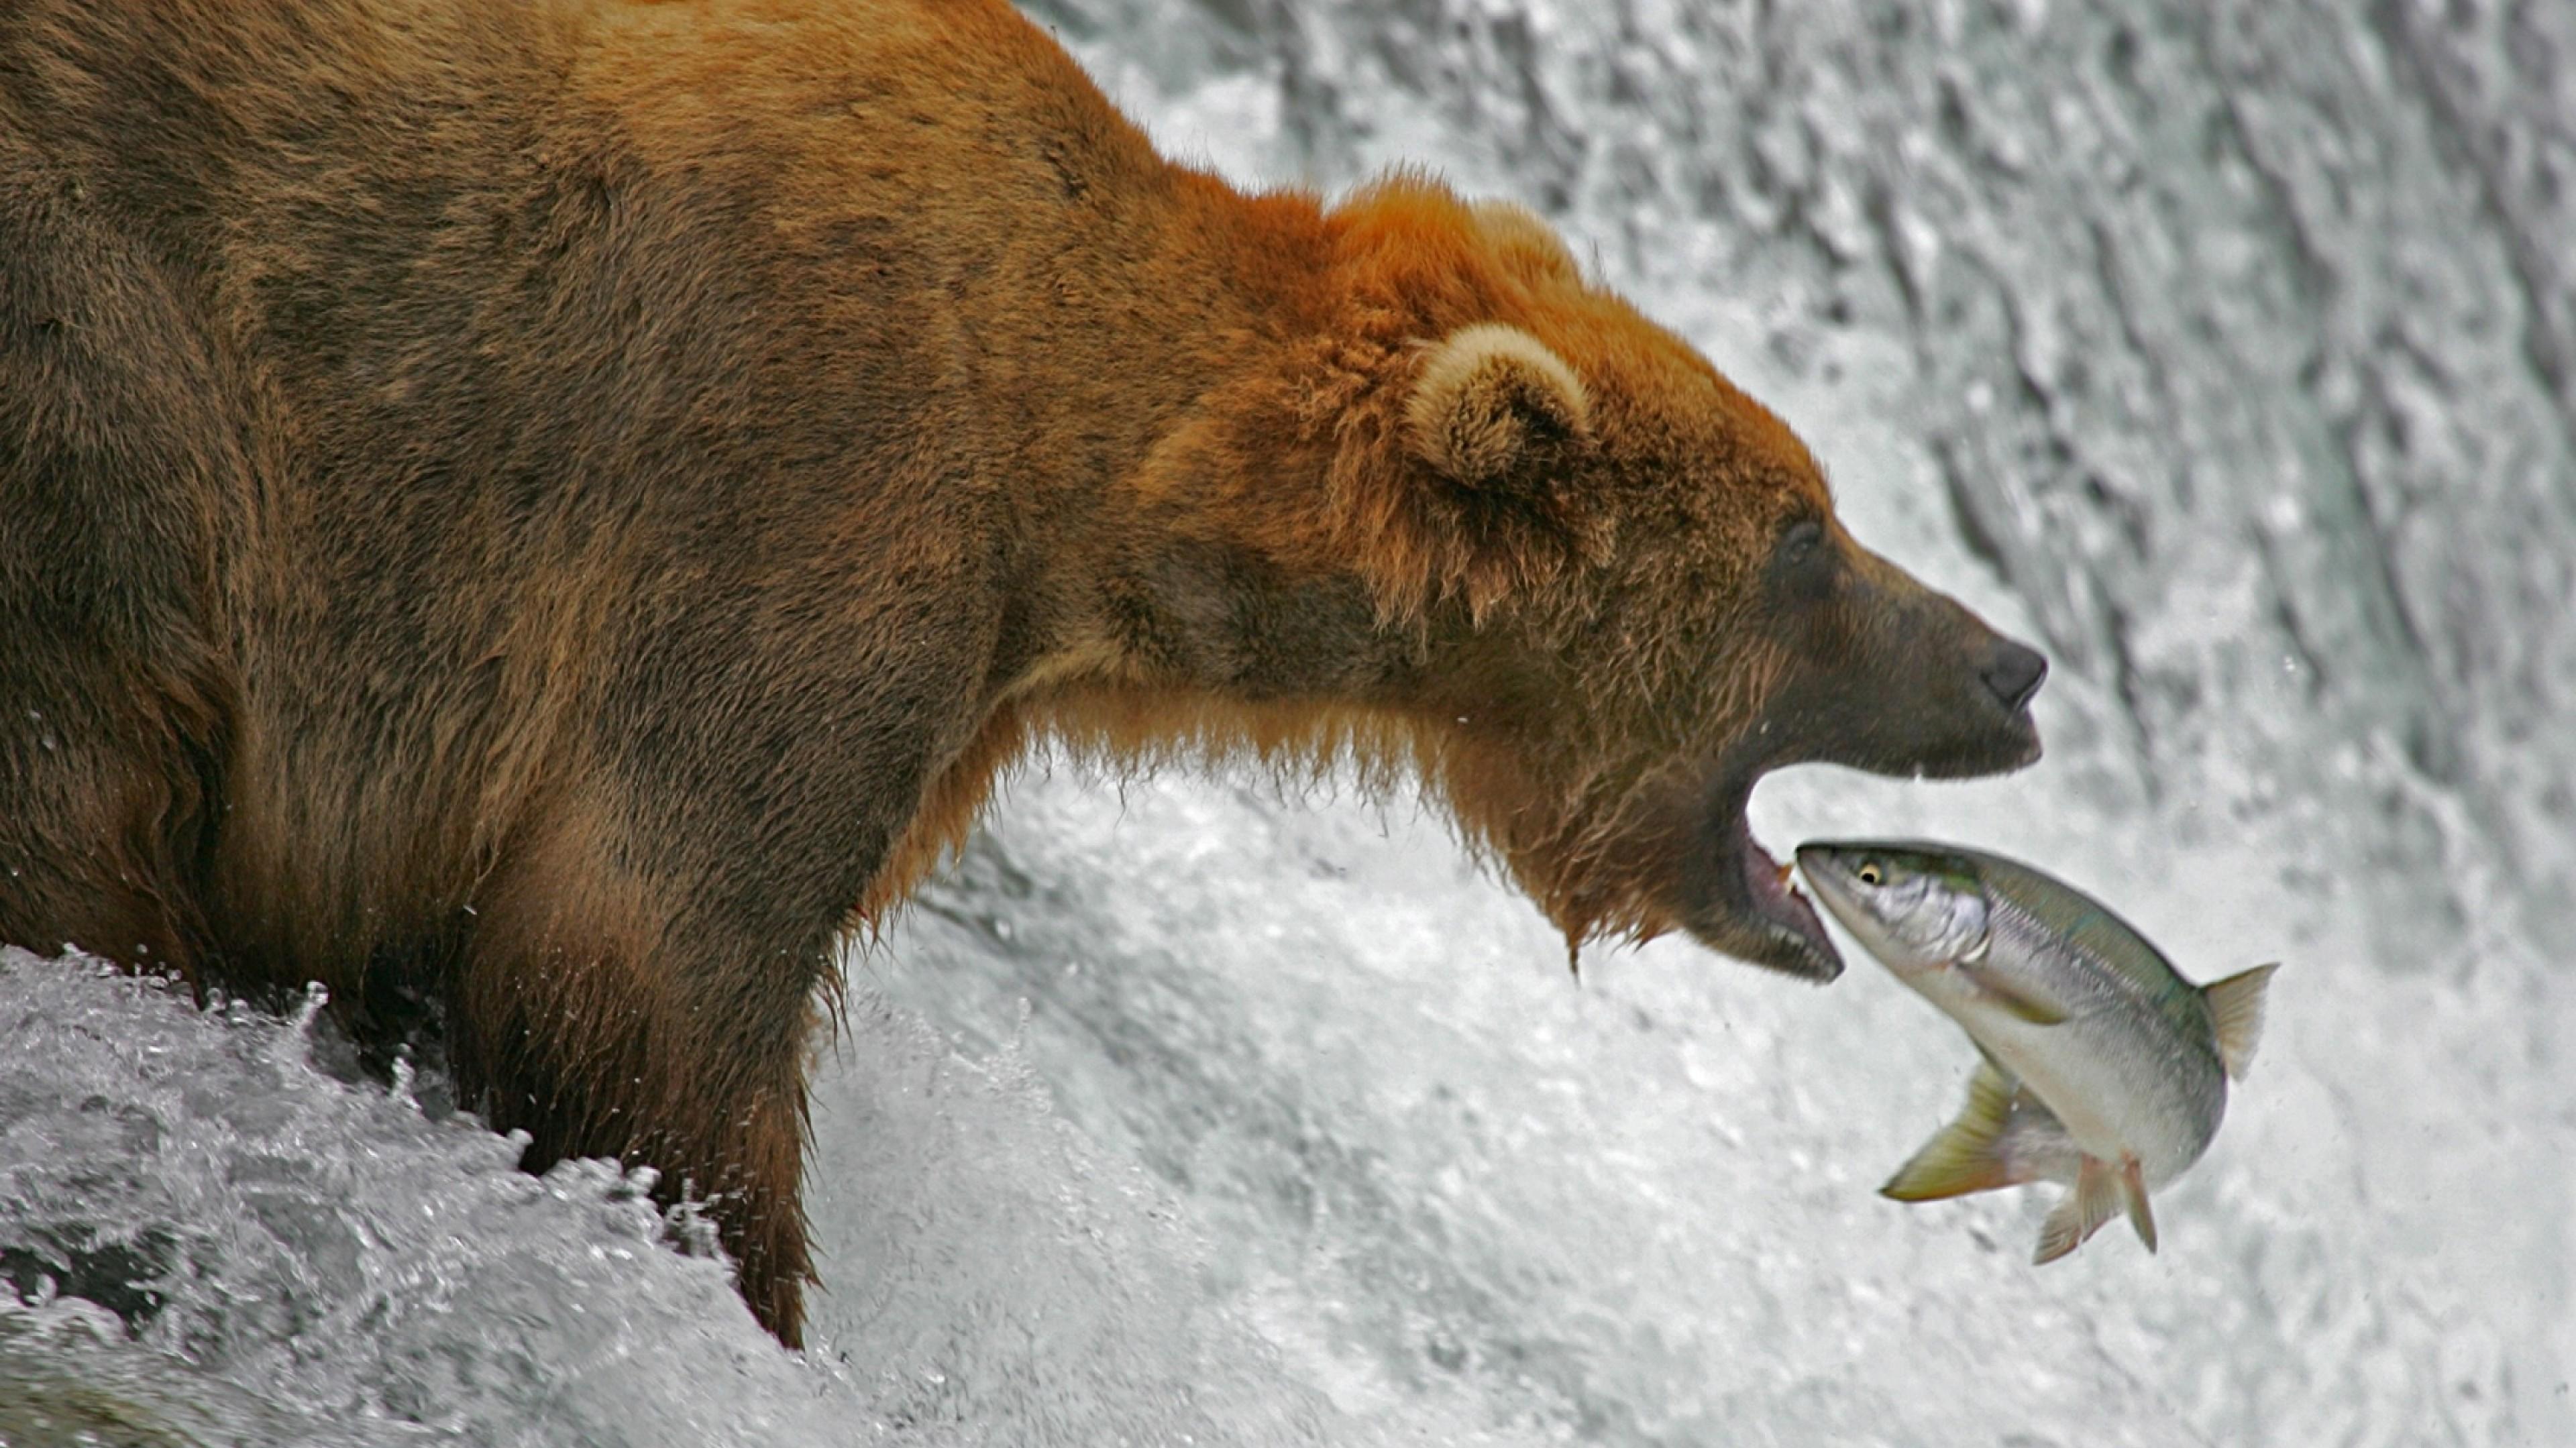 Fishing For Salmon With Alaska S Brown Bears HD Wallpaper 4k Ultra